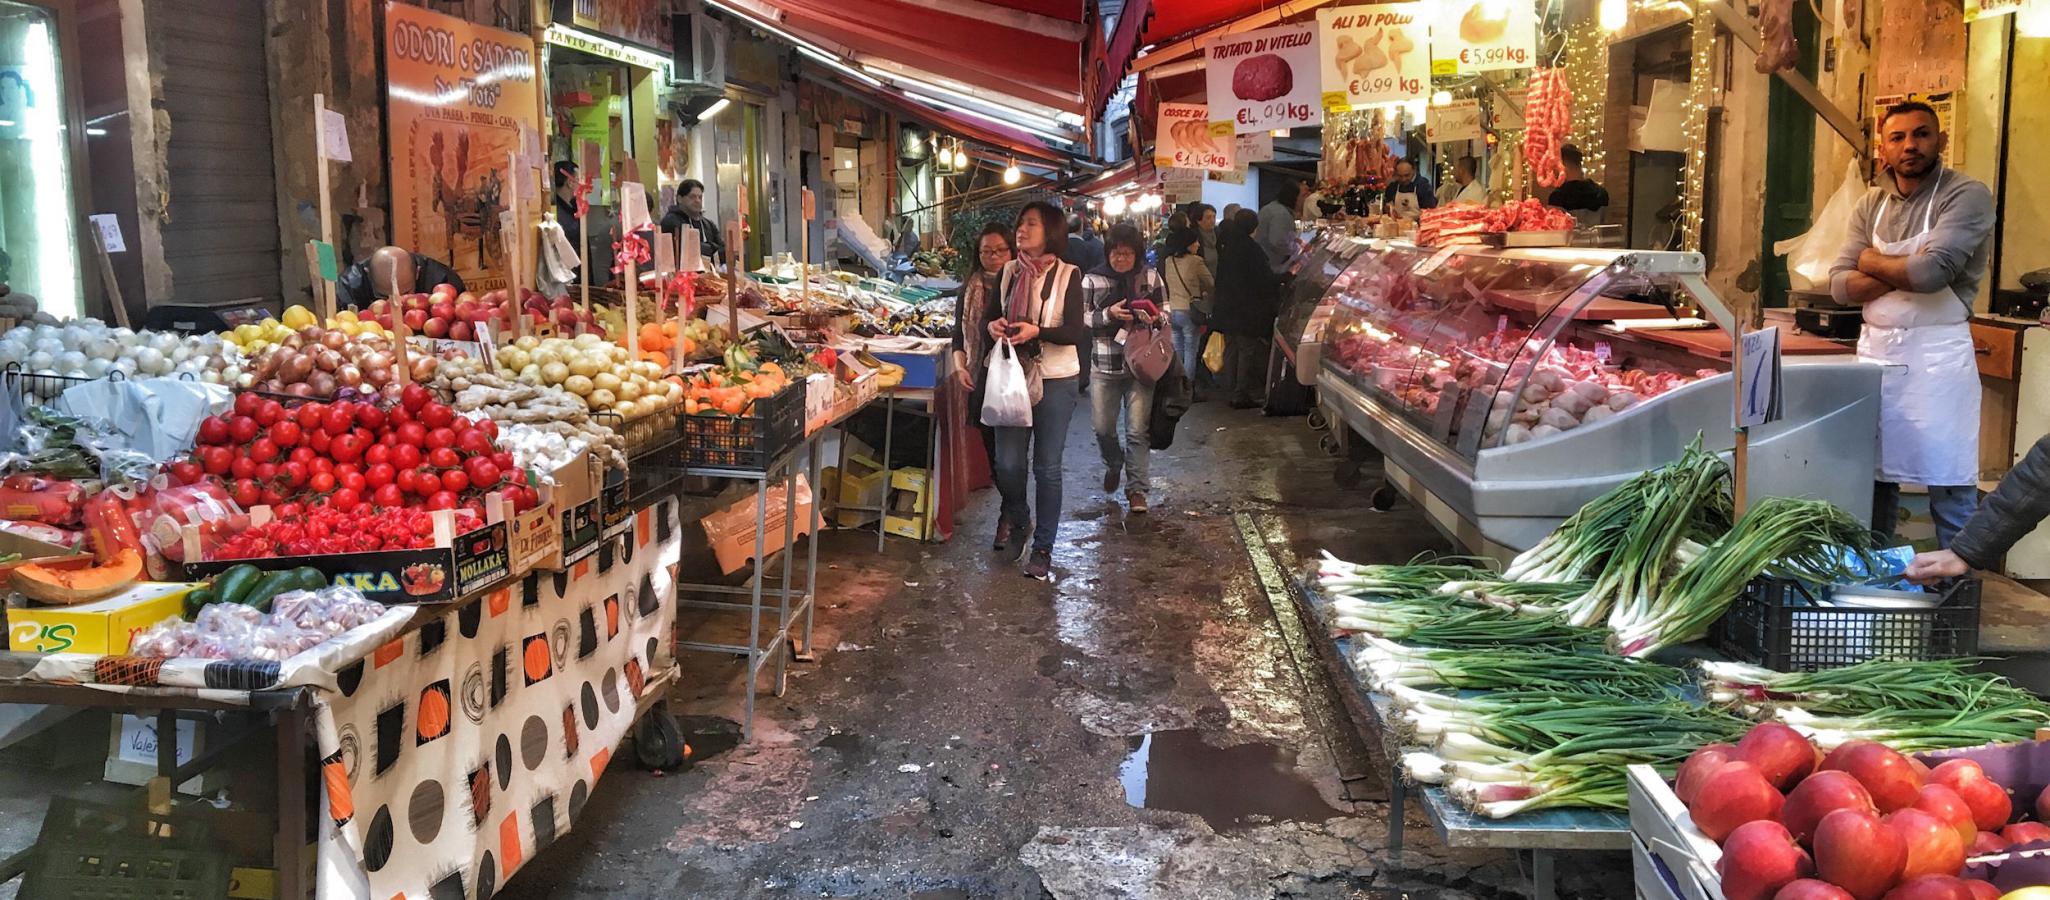 Уличный районный рынок в Палермо